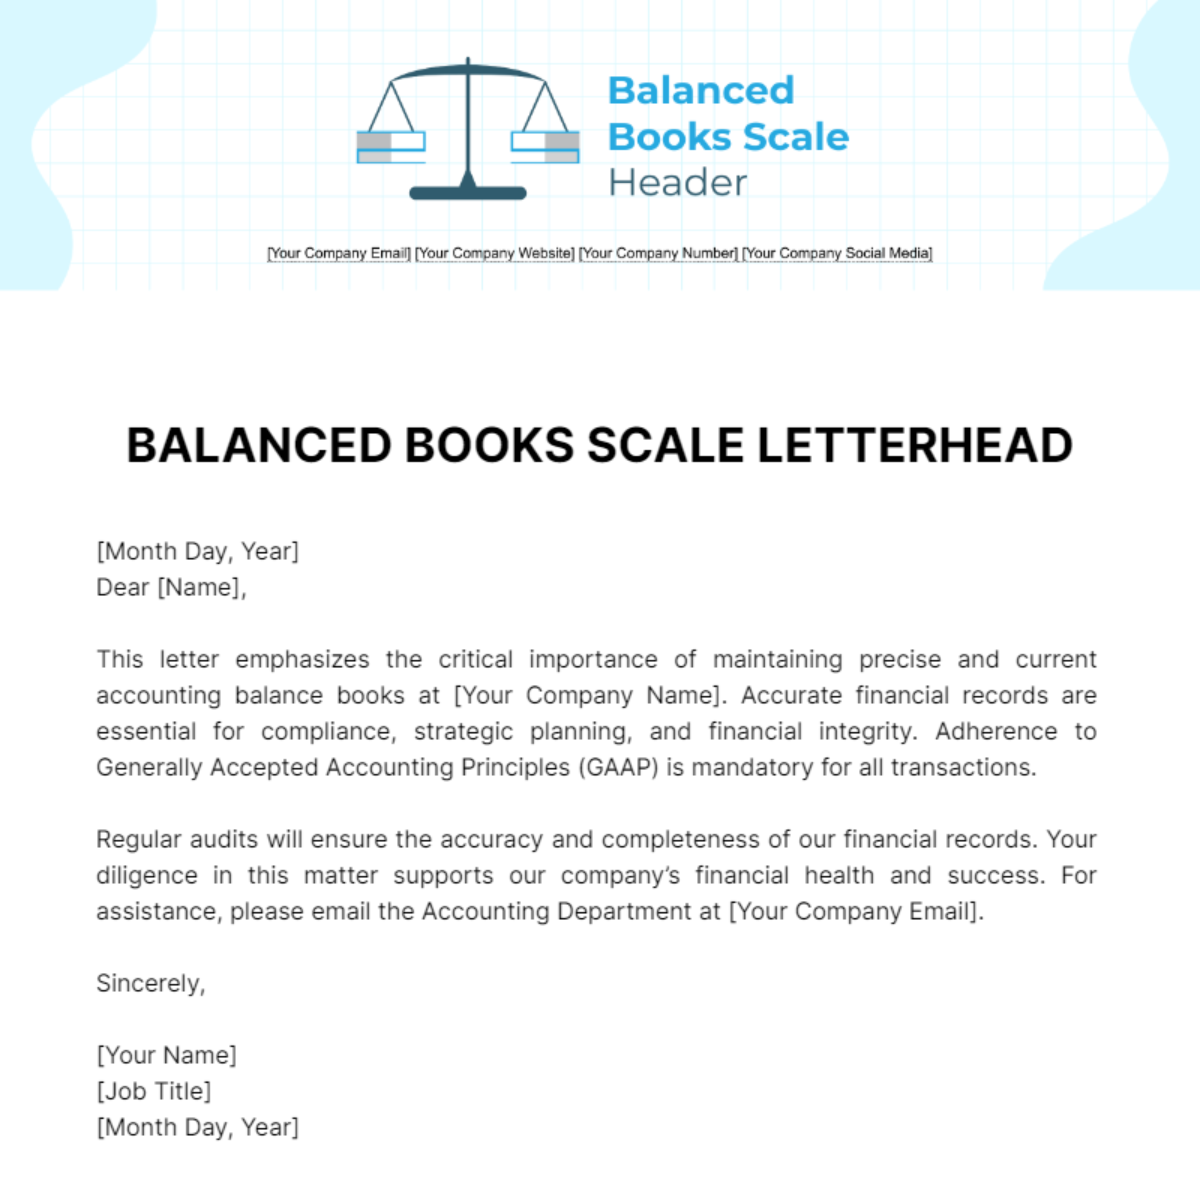 Balanced Books Scale Letterhead Template